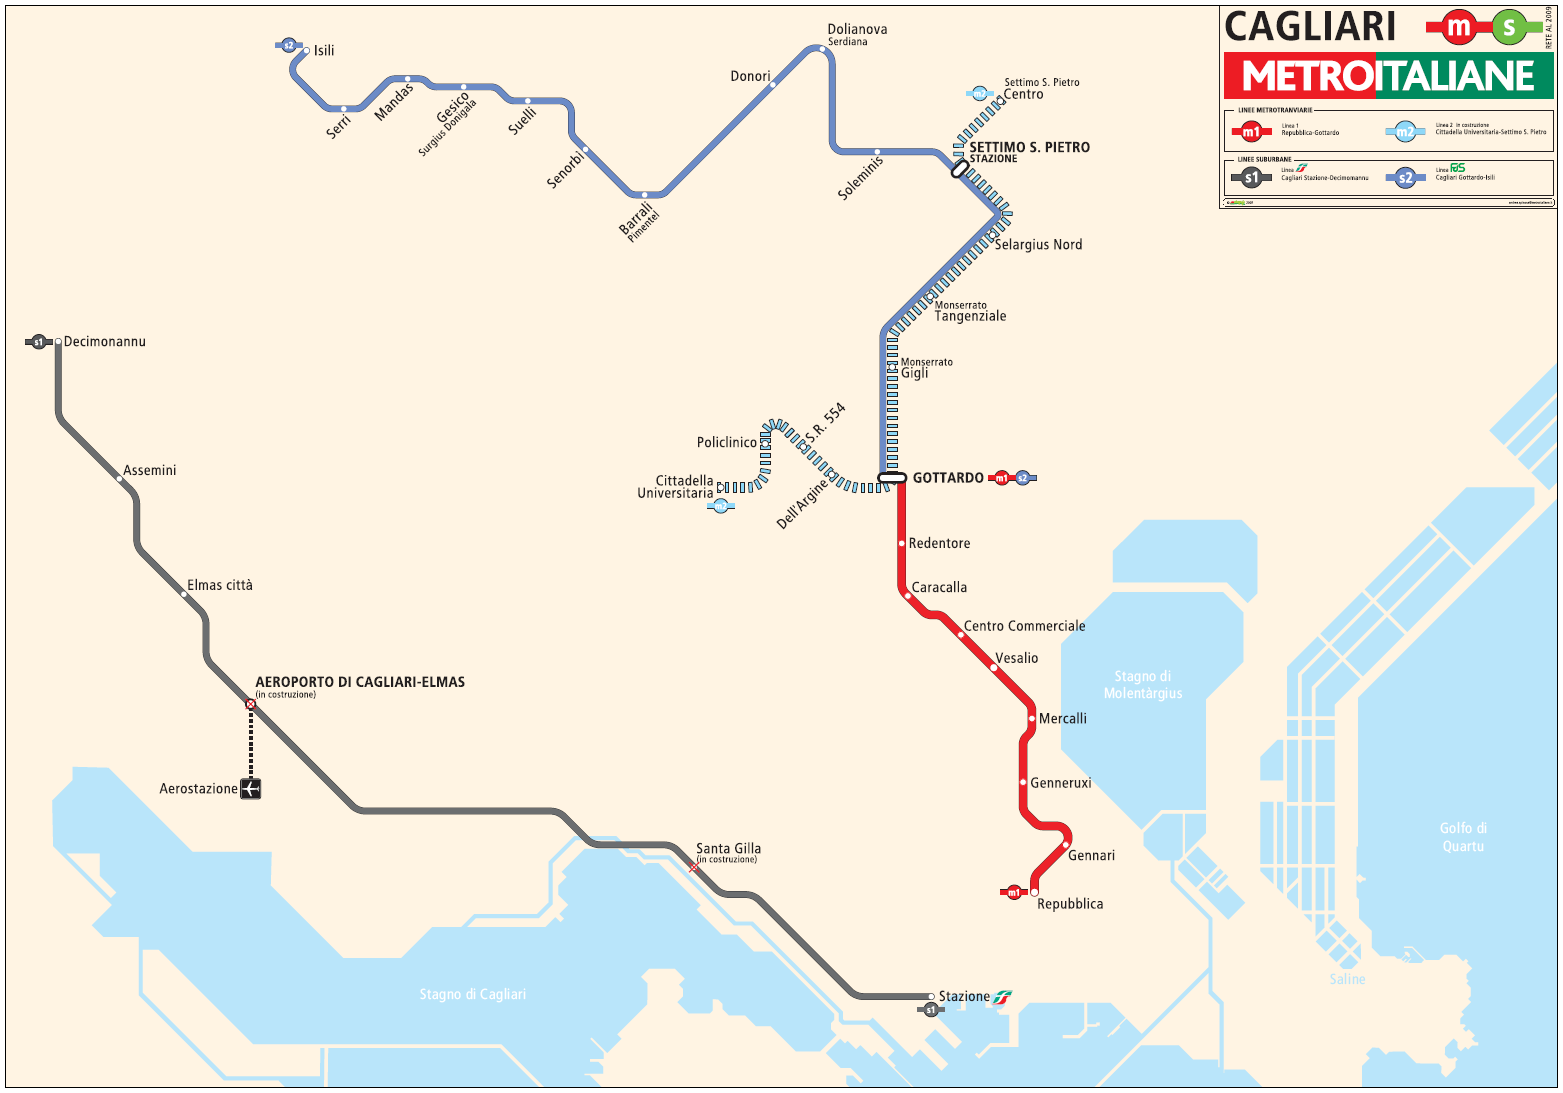 Metro map of Cagliari